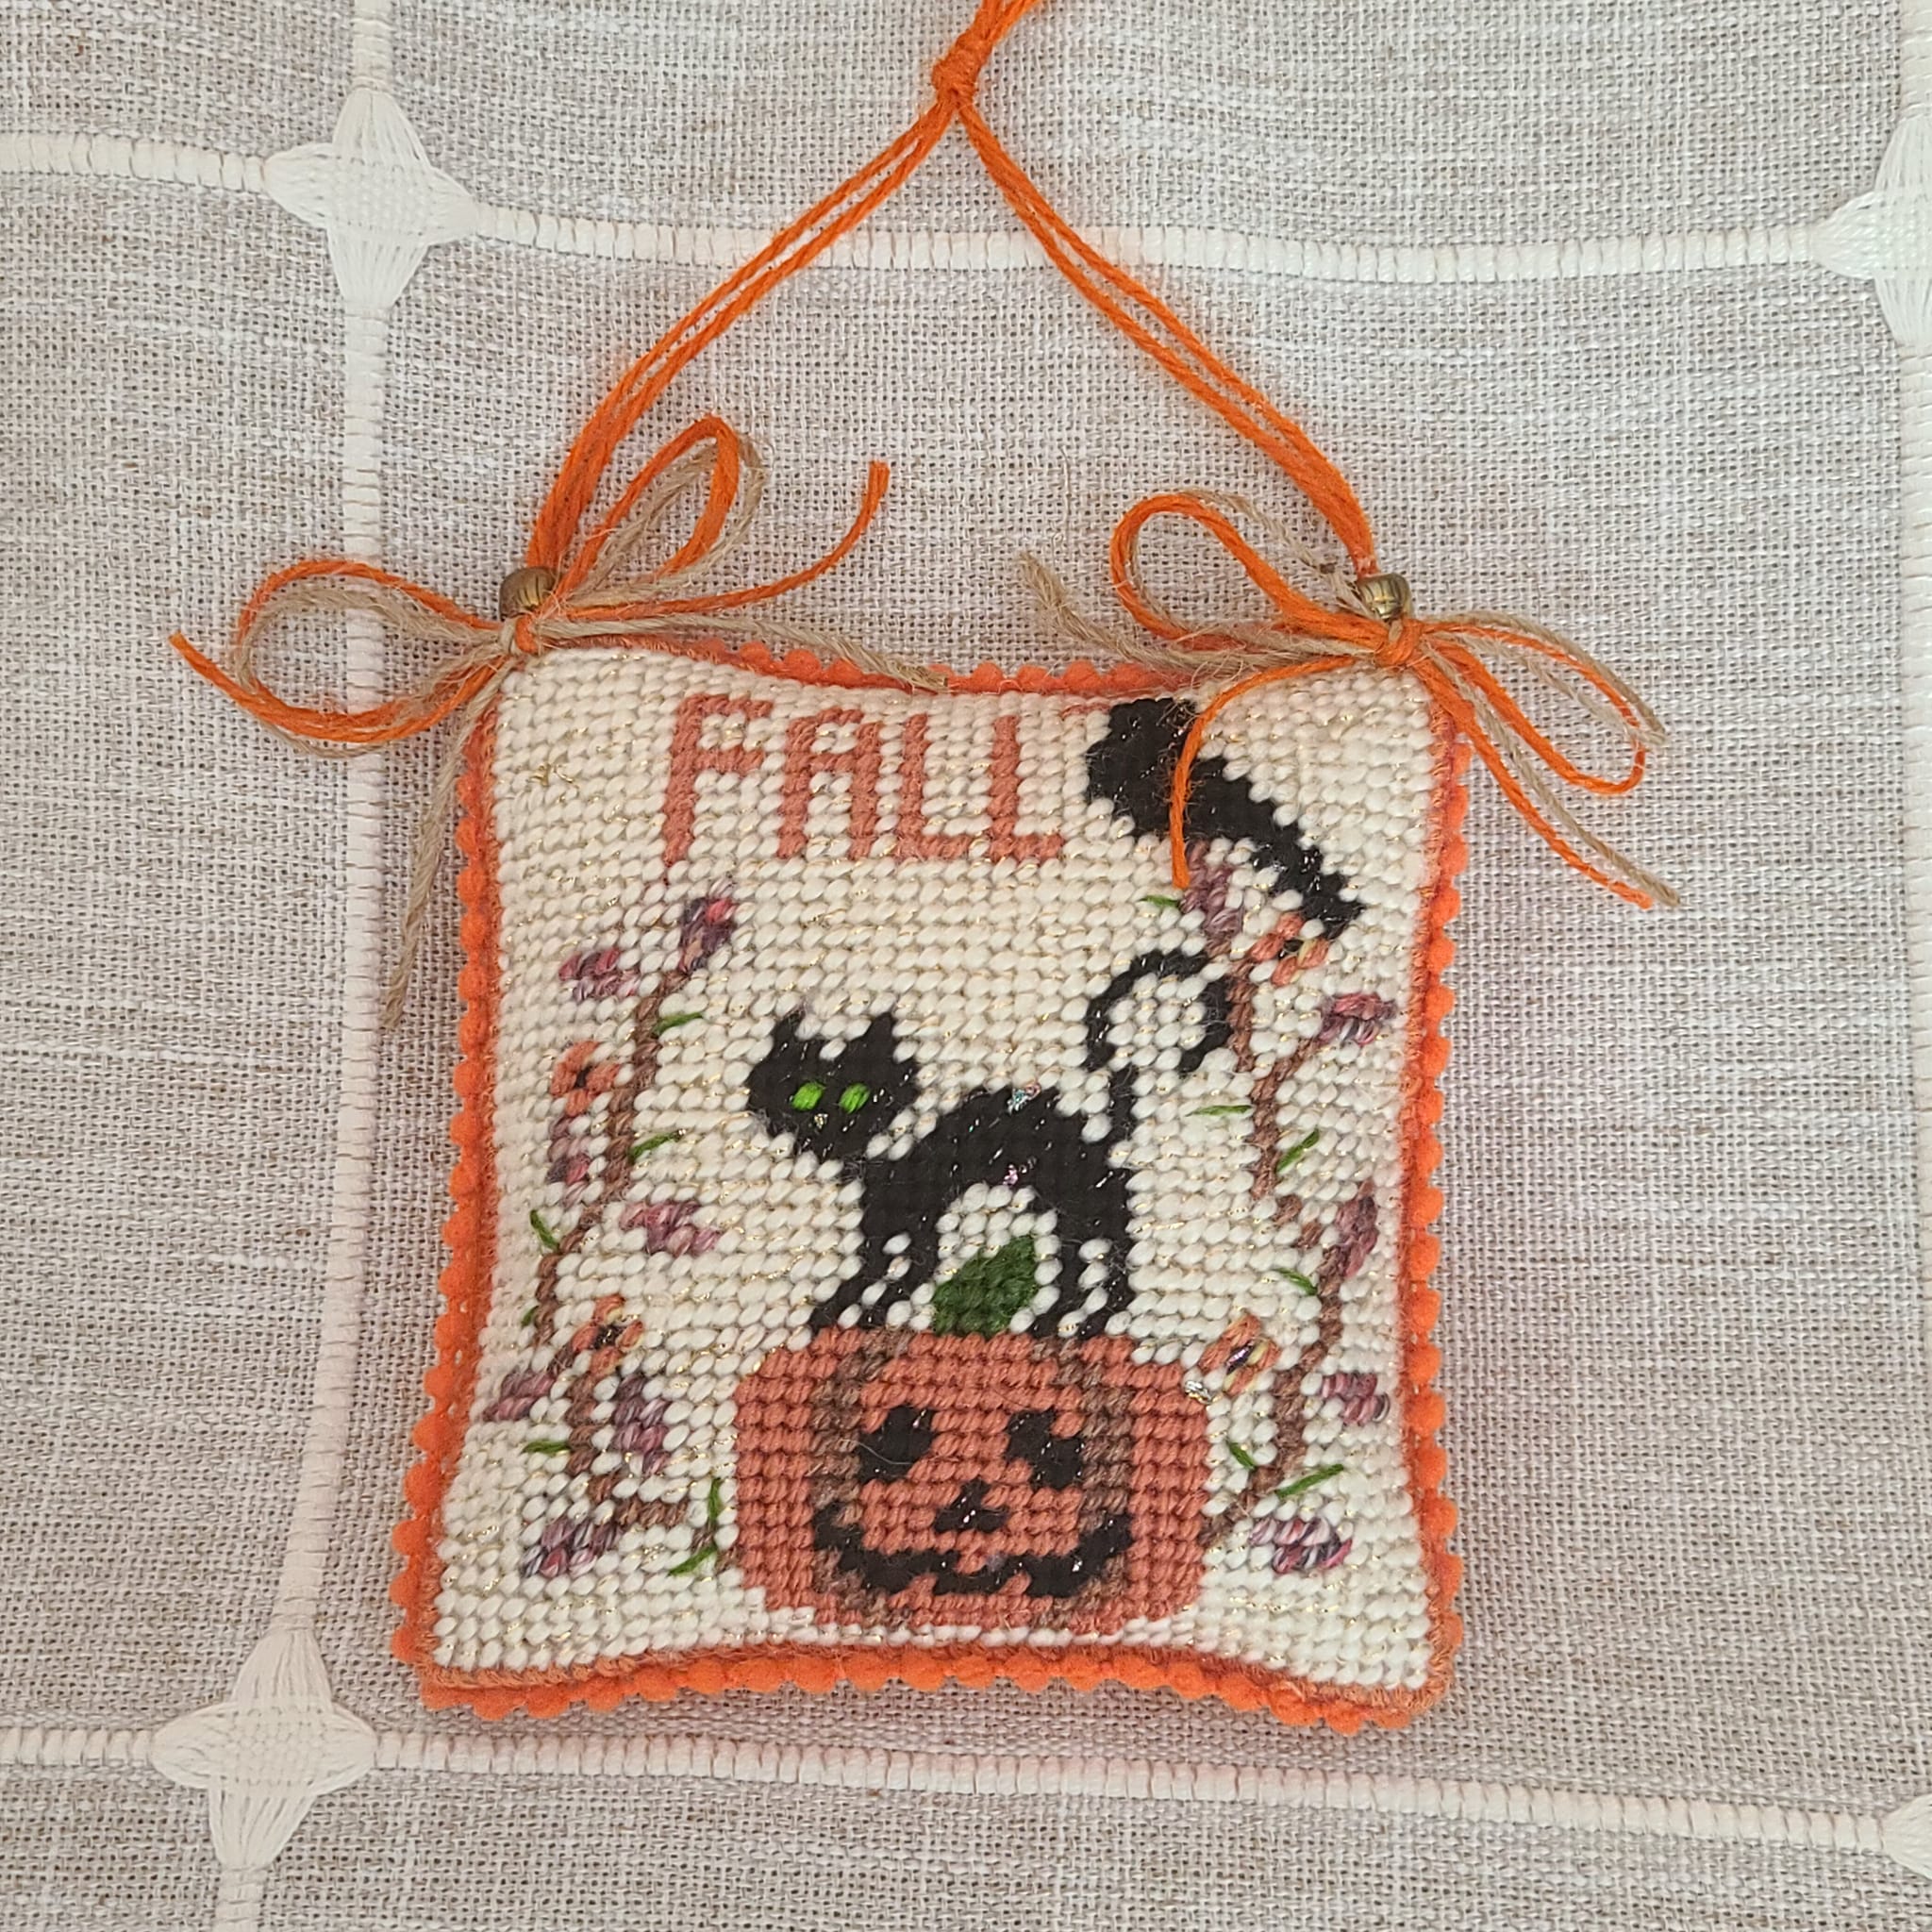 Hallowen finished needlepoint FALL pumpkin & black cat ornament